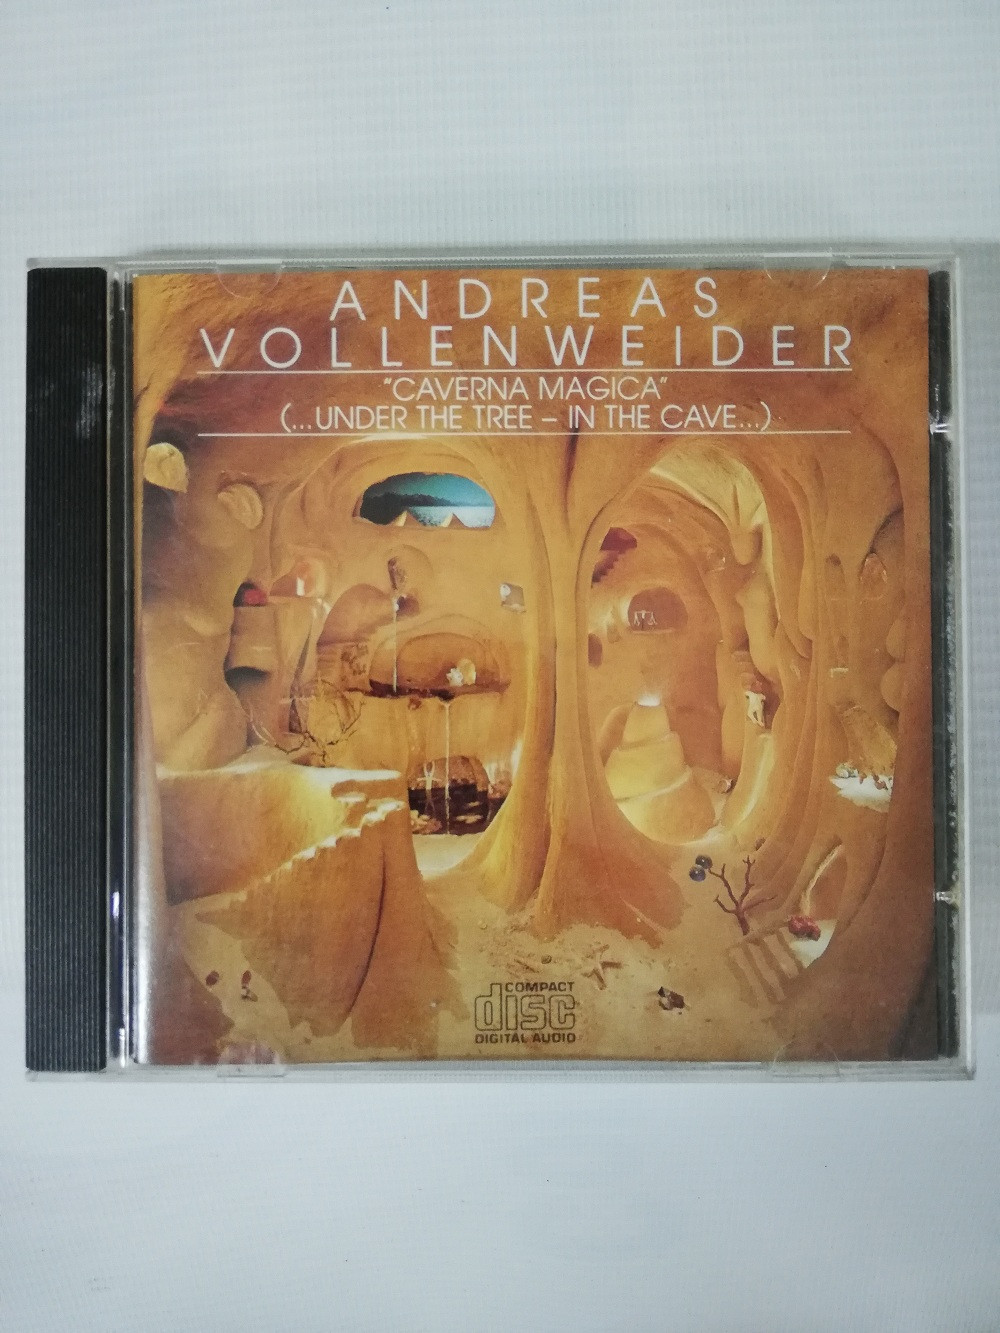 Imagen CD ANDREAS VOLLENWEIDER - CAVERNA MÁGICA 1